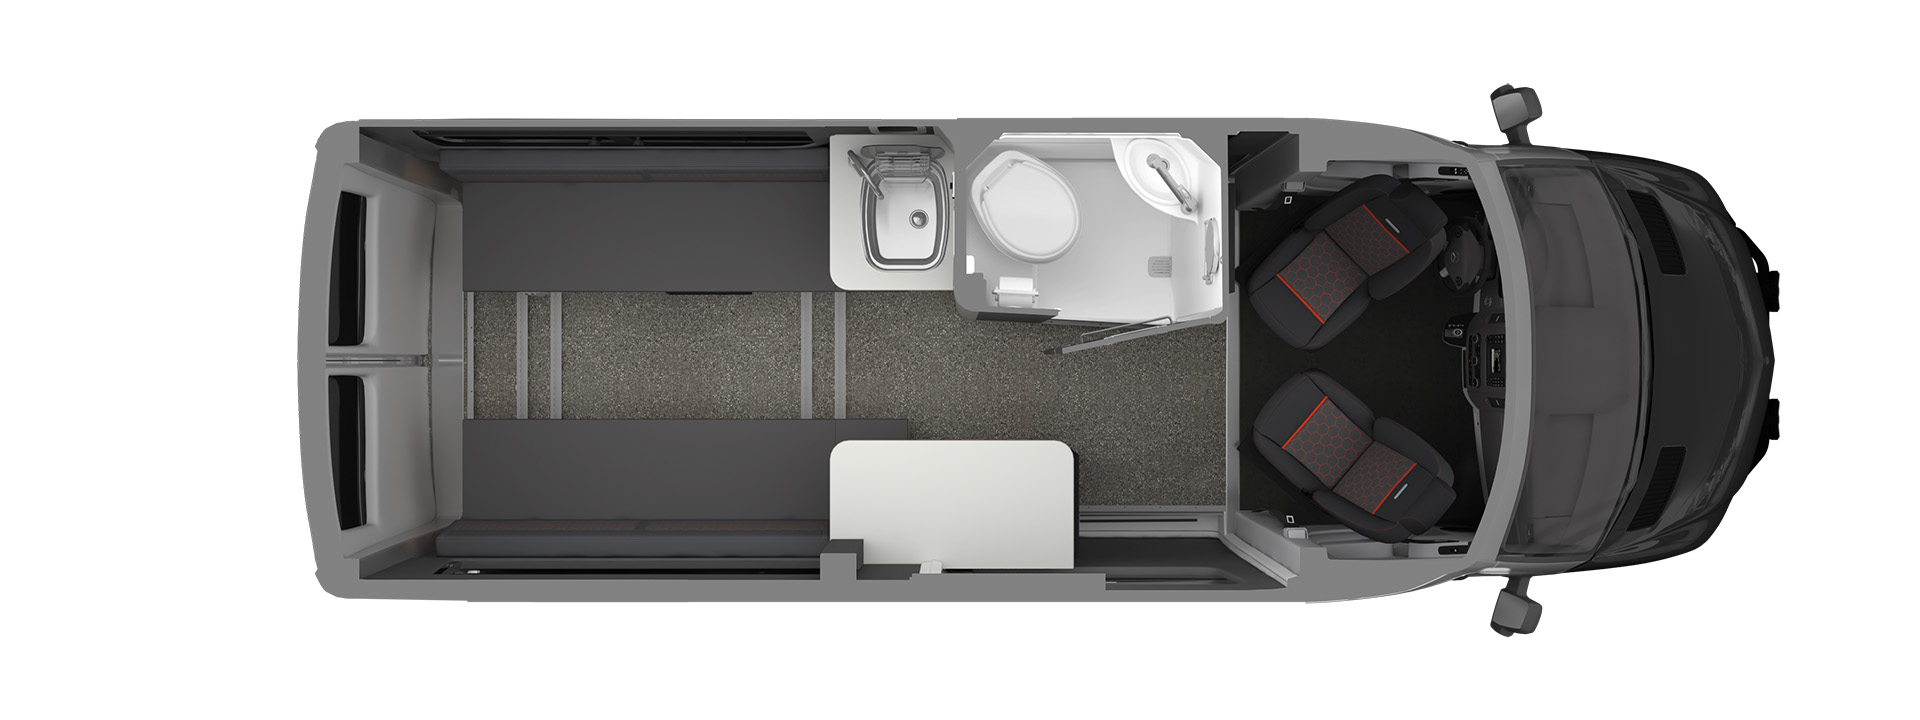 The floor plan of the Airstream Interstate 19X Class B Motorhome